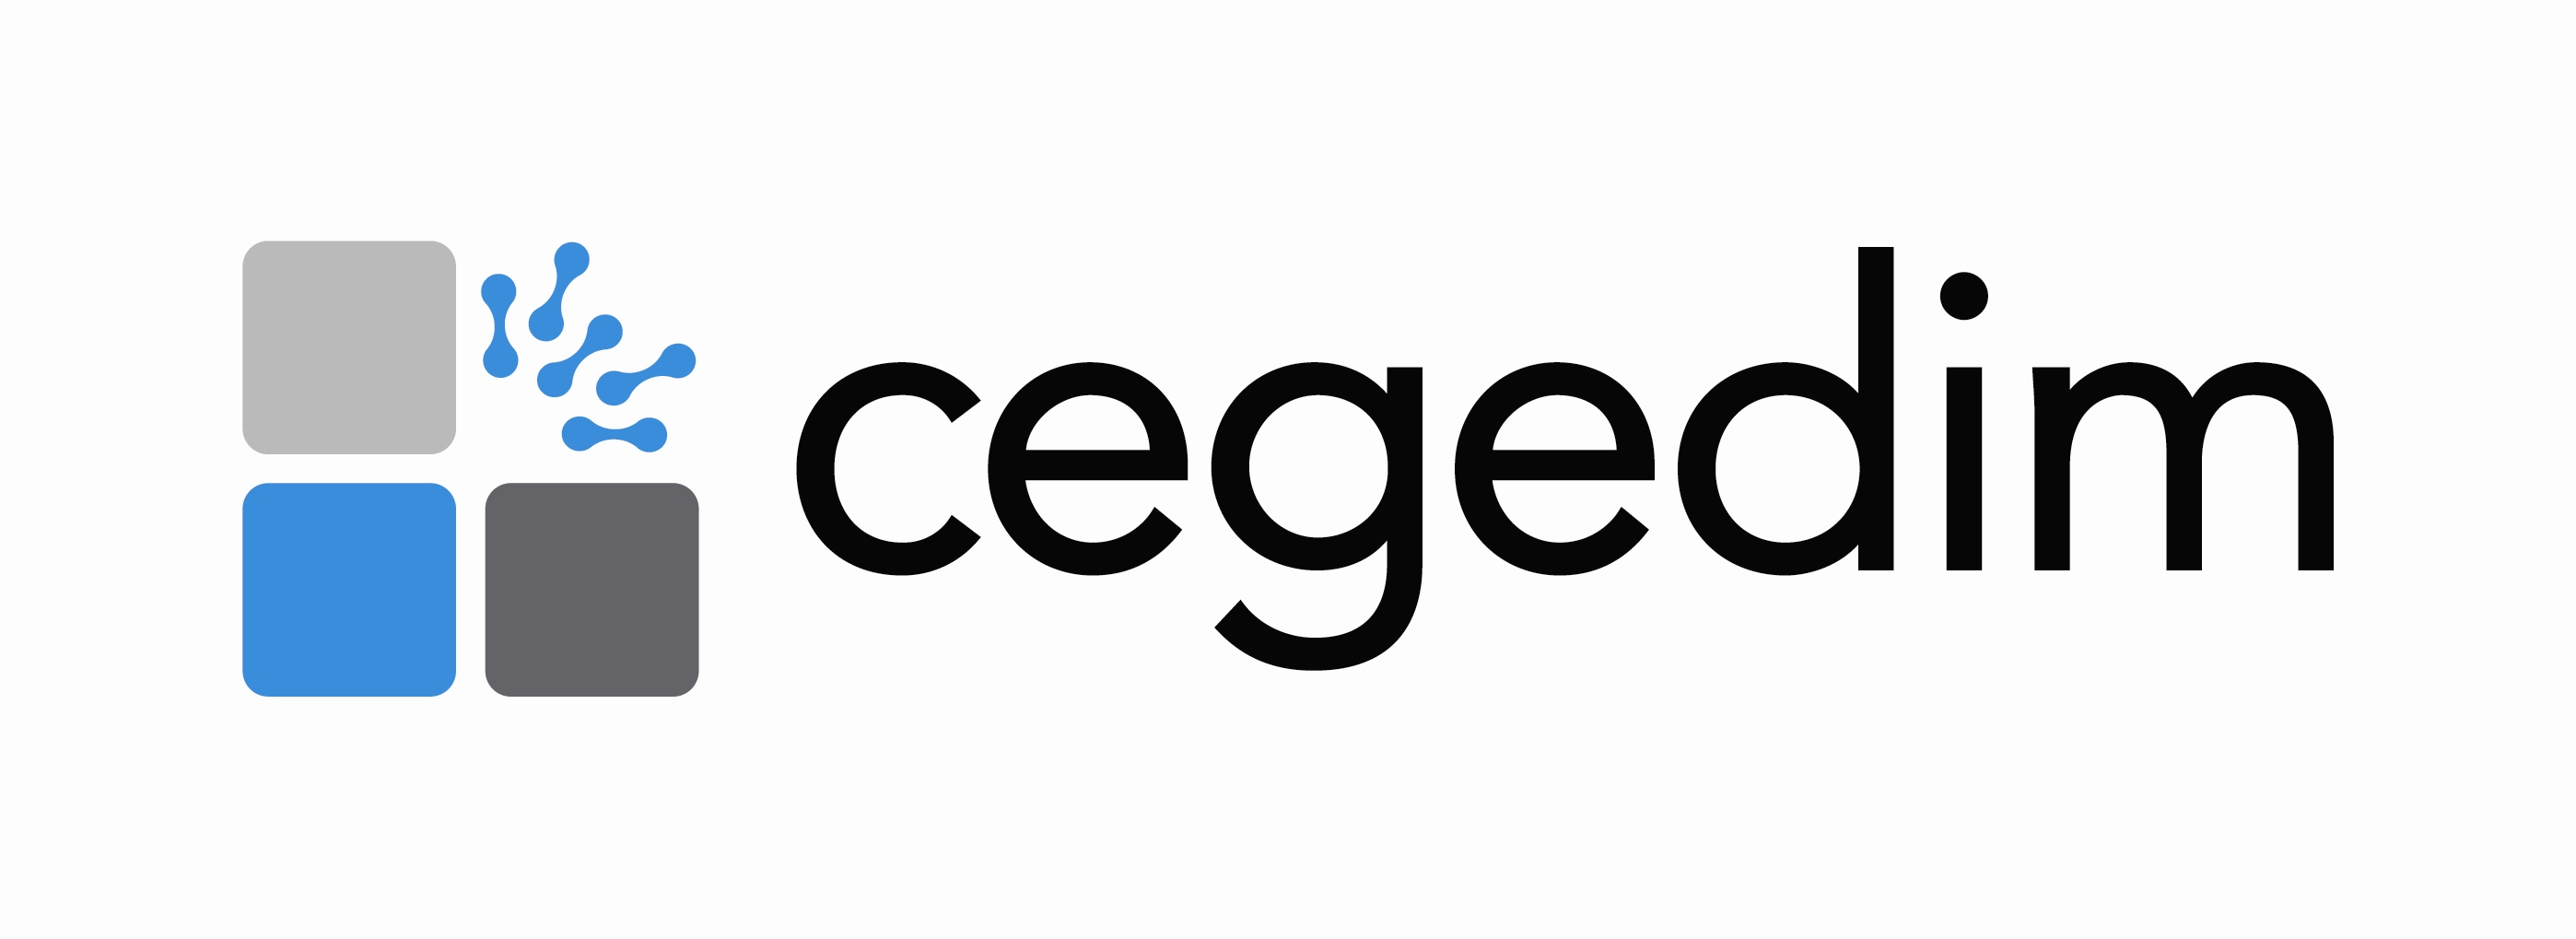 Cegedim logo